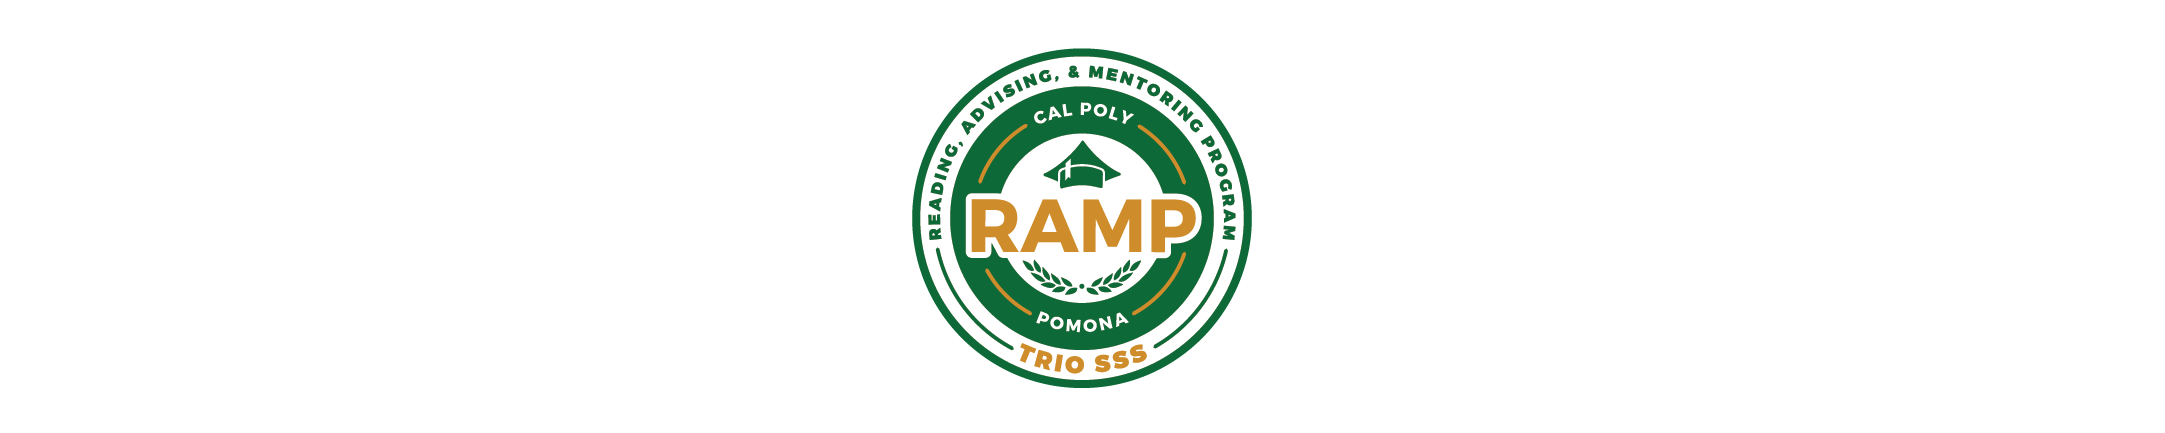 Reading Advising Mentoring Program (RAMP) Cal Poly Pomona - Trio SSS